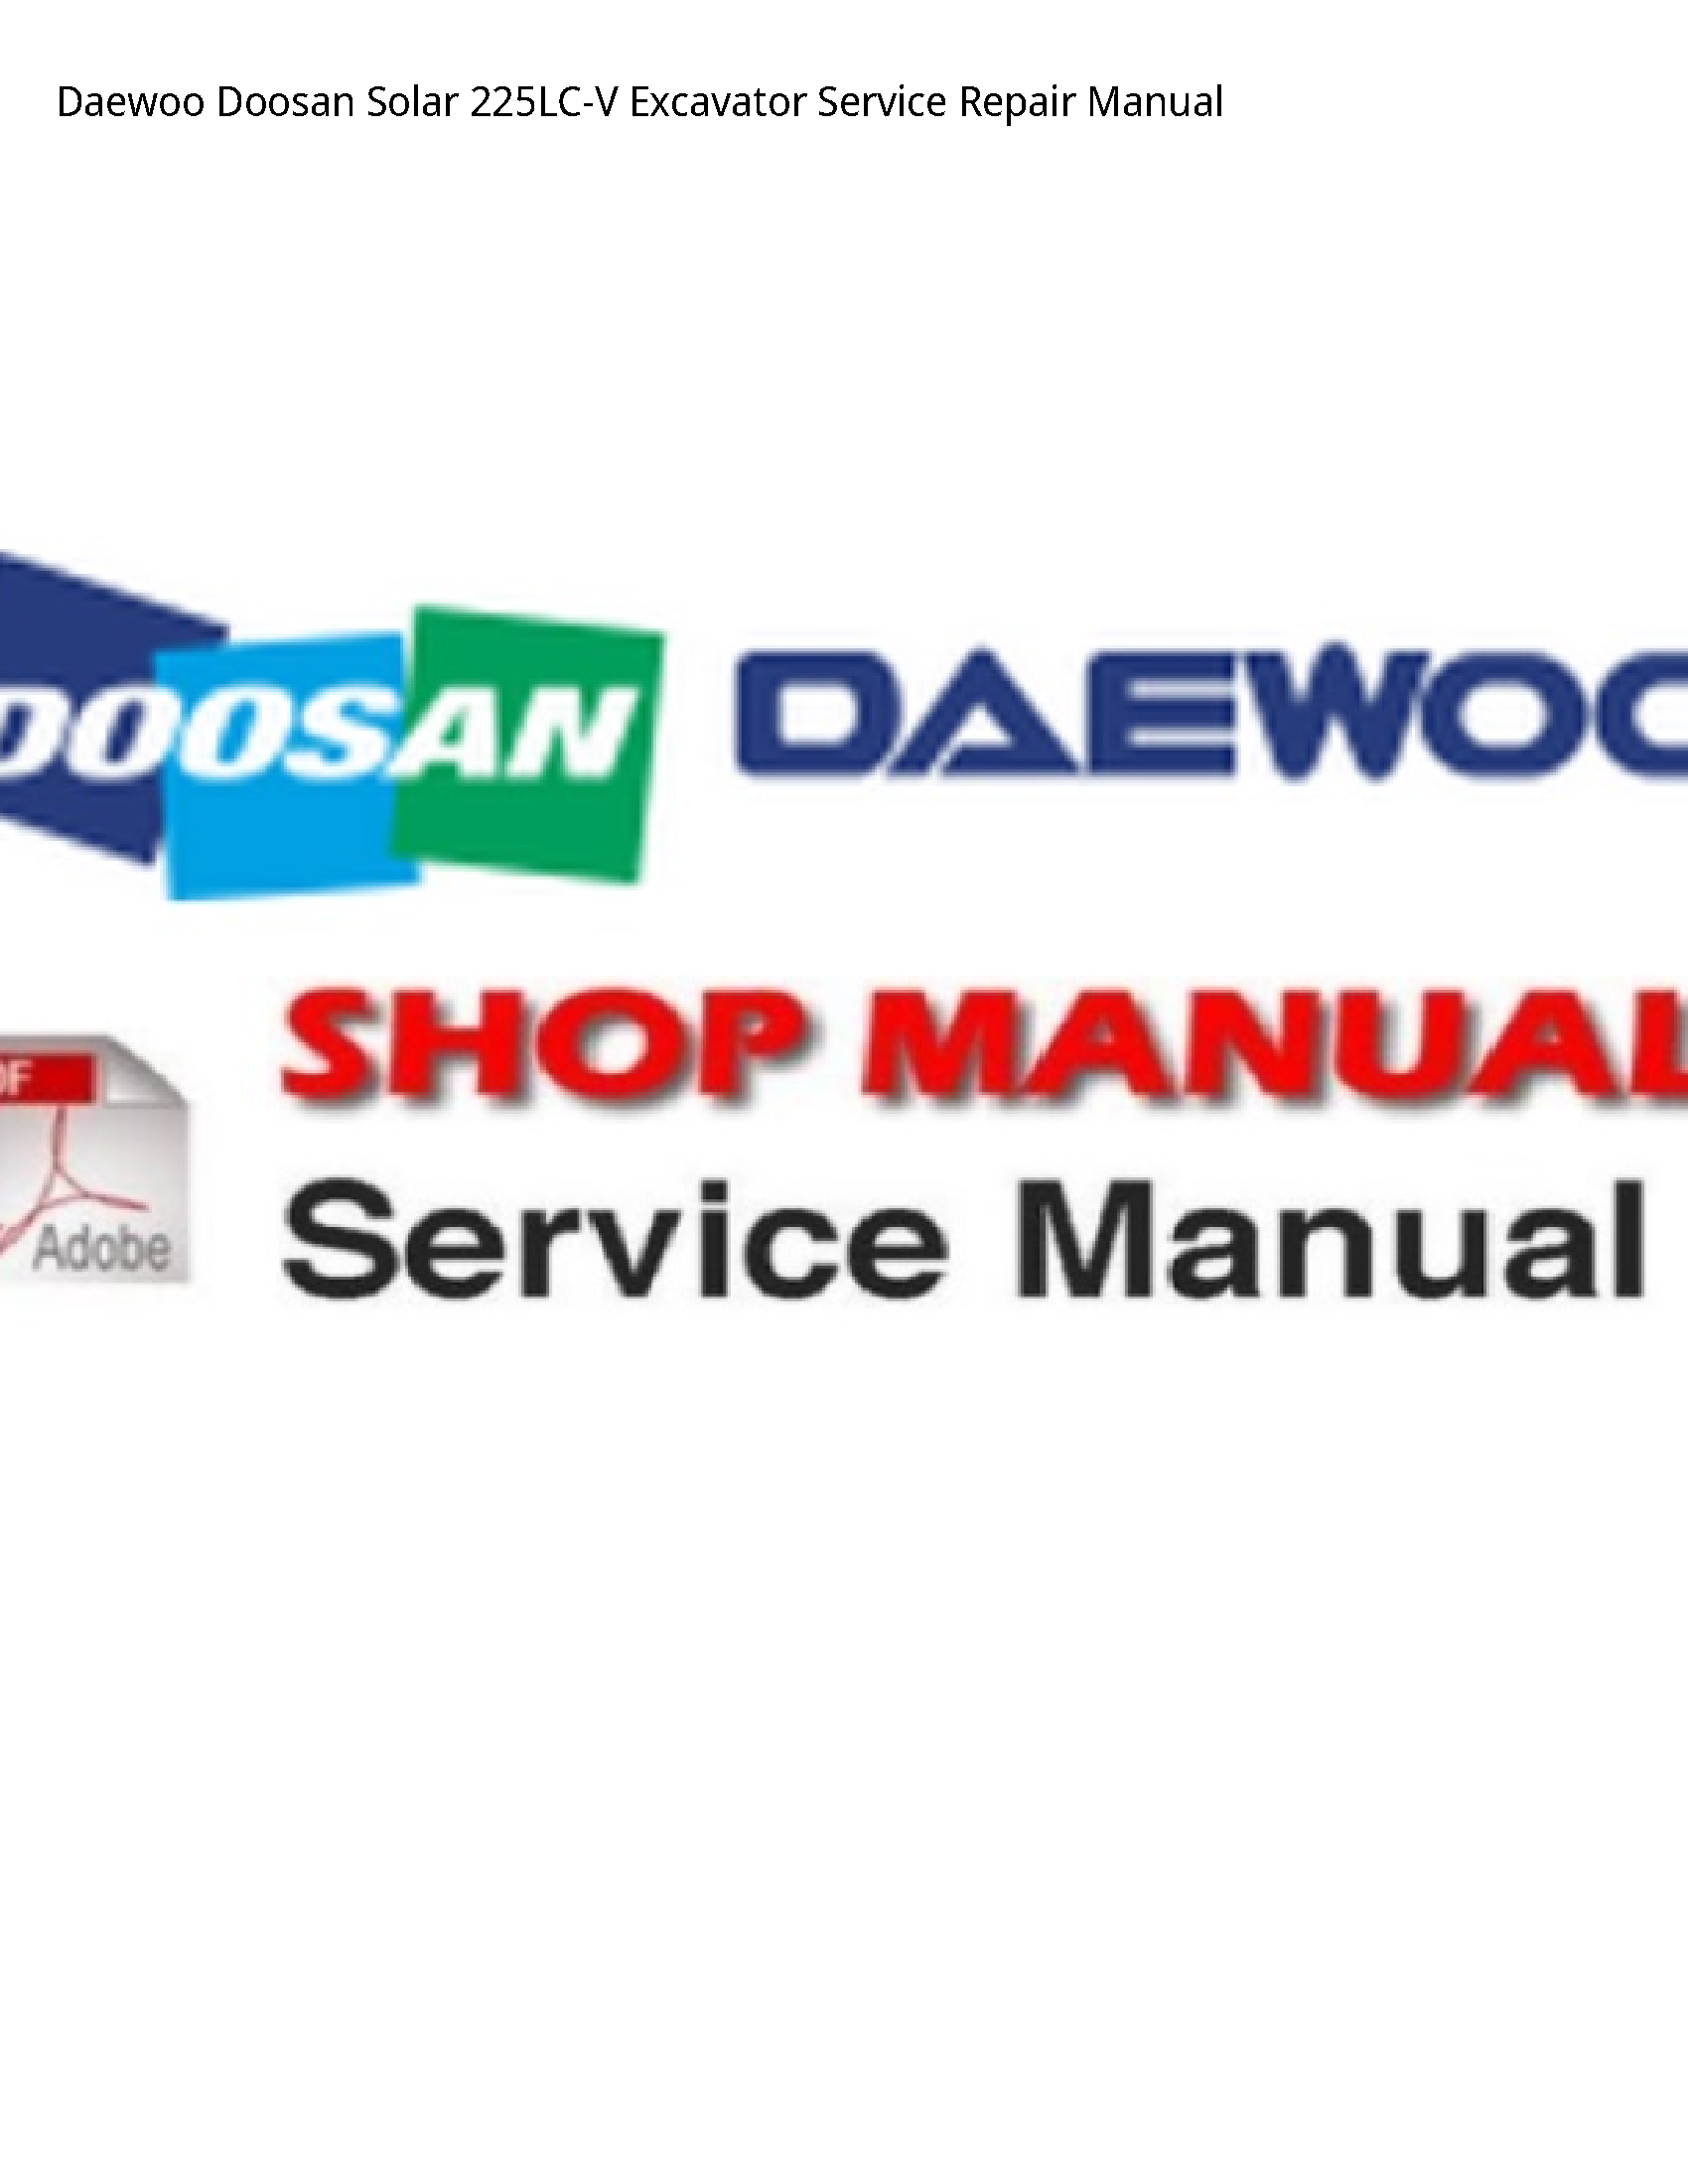 Daewoo Doosan 225LC-V Solar Excavator manual